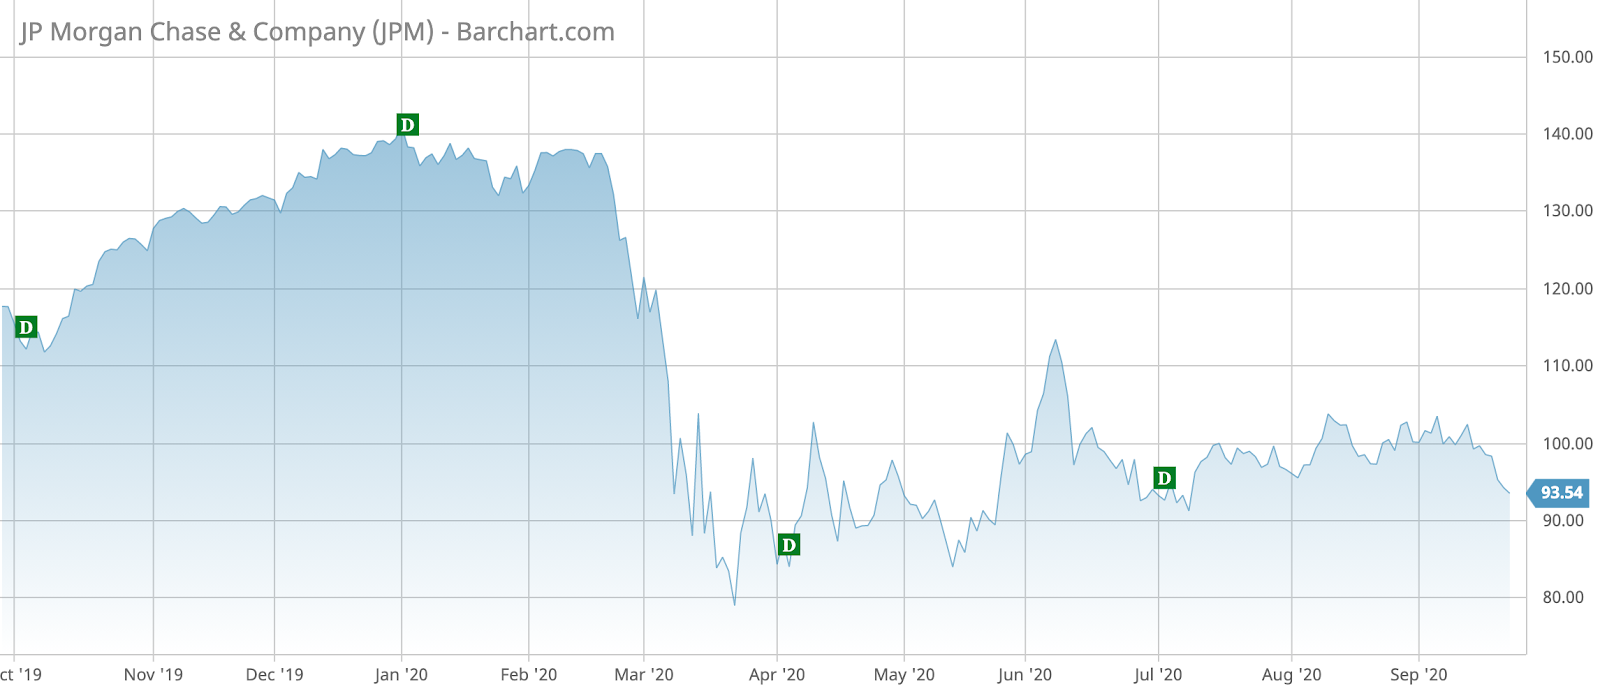 JPM Barchart Interactive Chart 09 23 2020